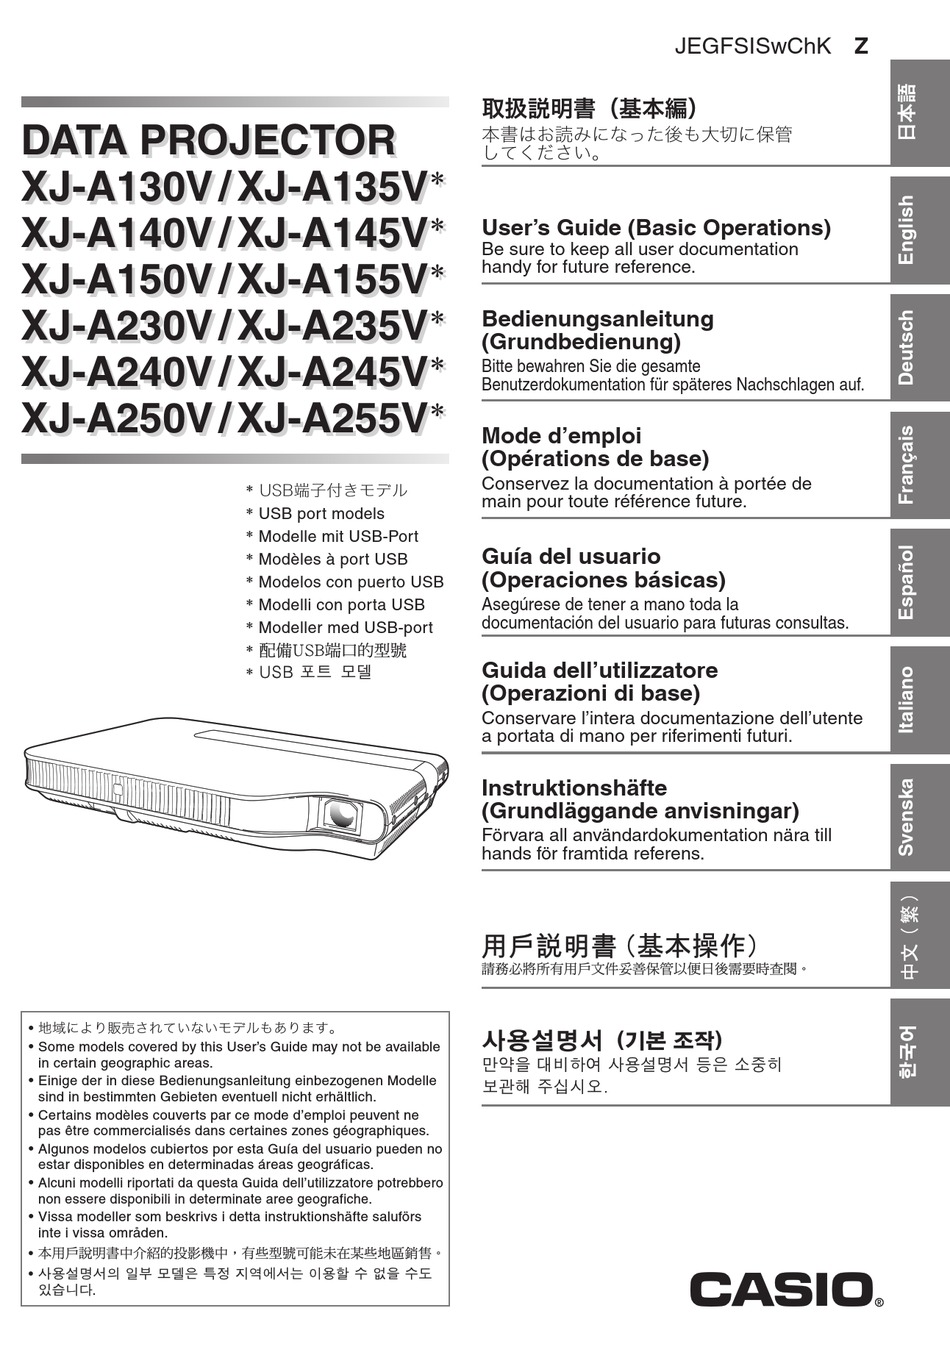 CASIO XJ-A130V SERIES USER MANUAL Pdf Download | ManualsLib